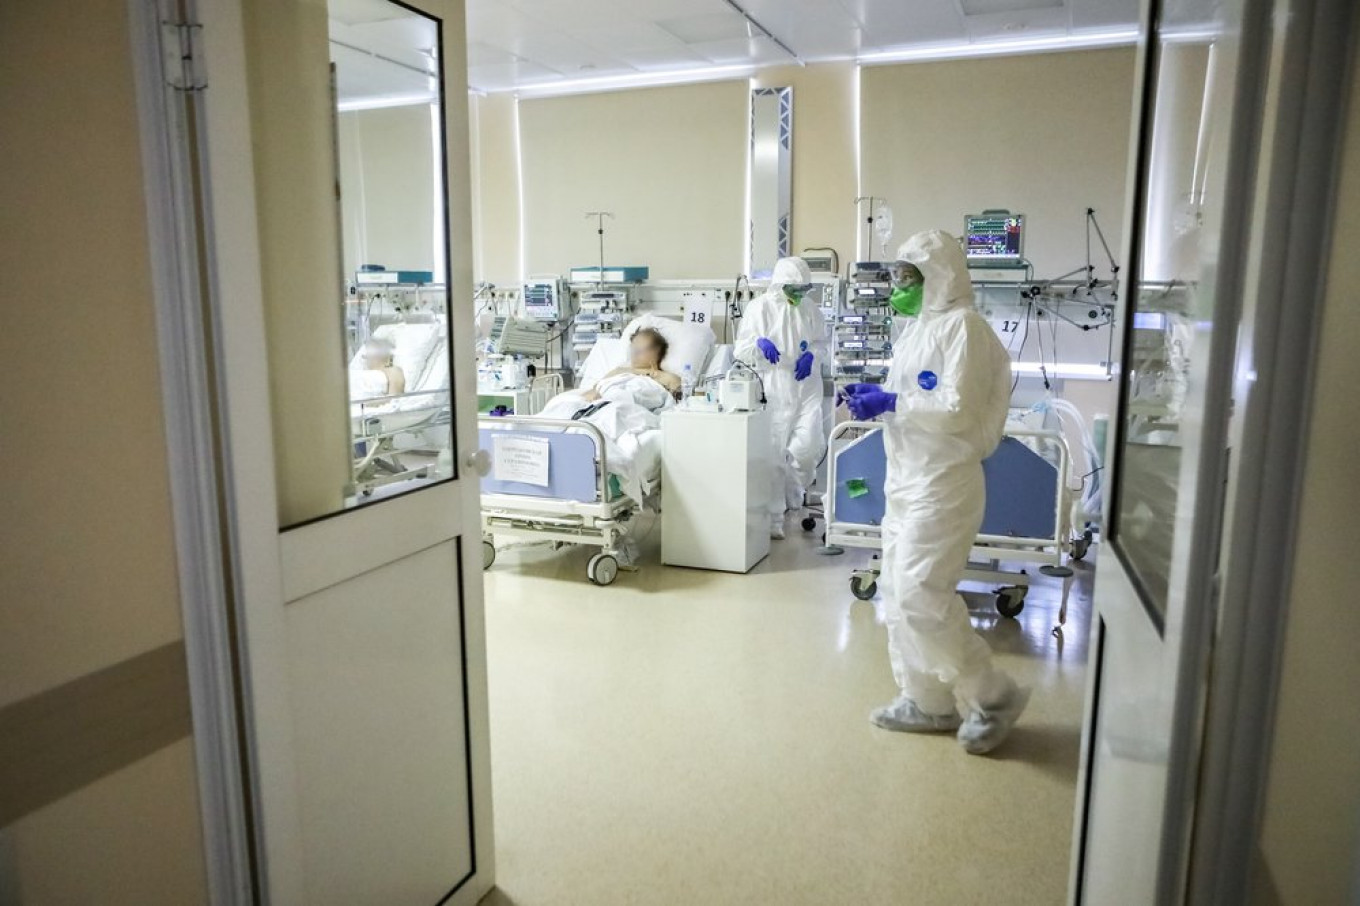 Russia’s Coronavirus Death Spike Explained by Methodology, Statistics Chief Says